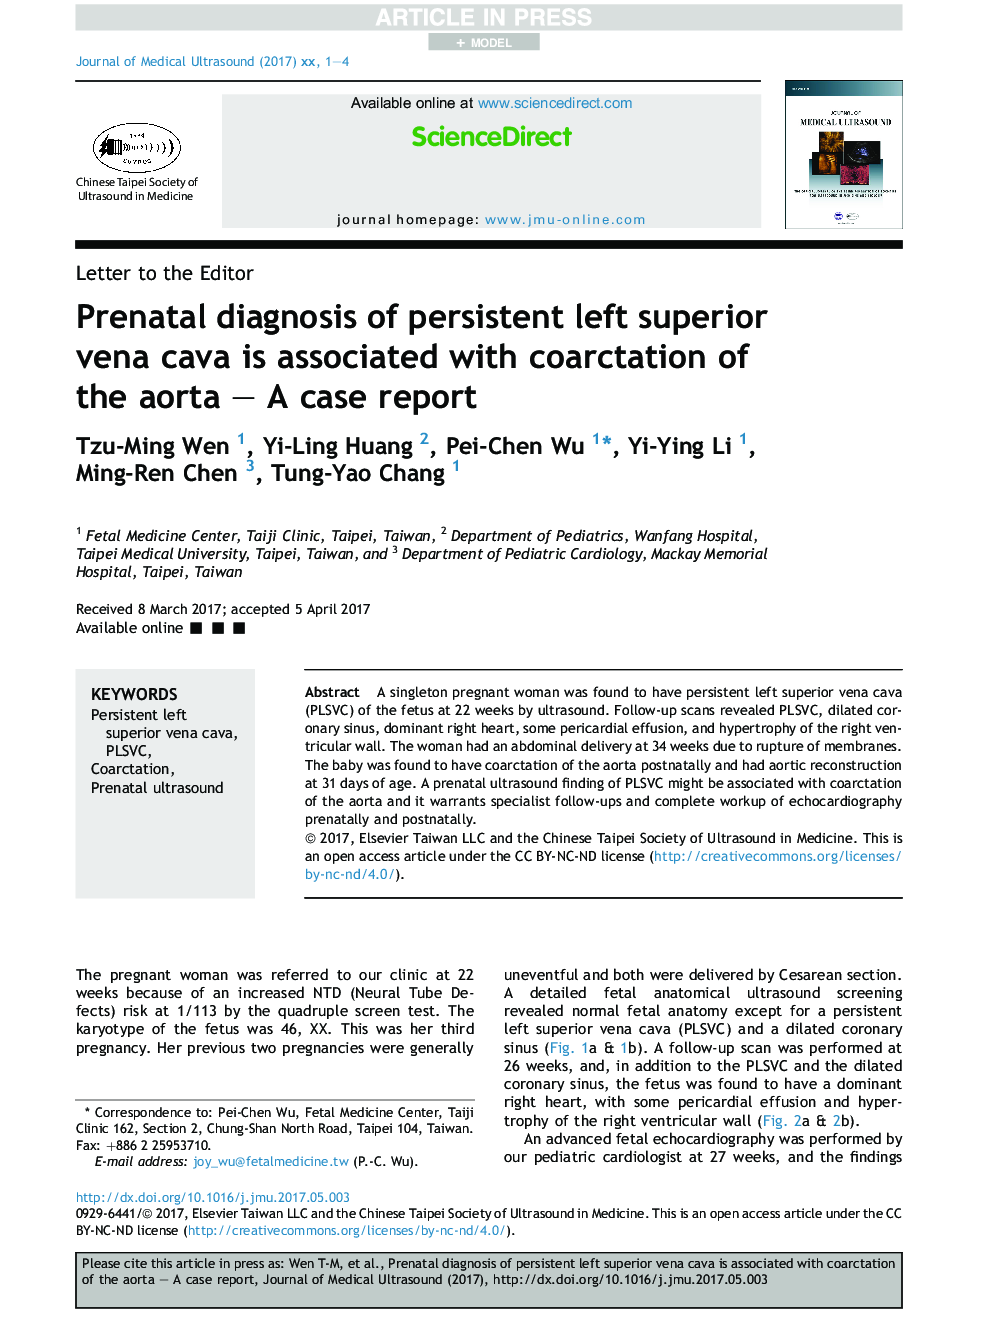 Prenatal Diagnosis of Persistent Left Superior Vena Cava is Associated with Coarctation of the Aorta - A Case Report